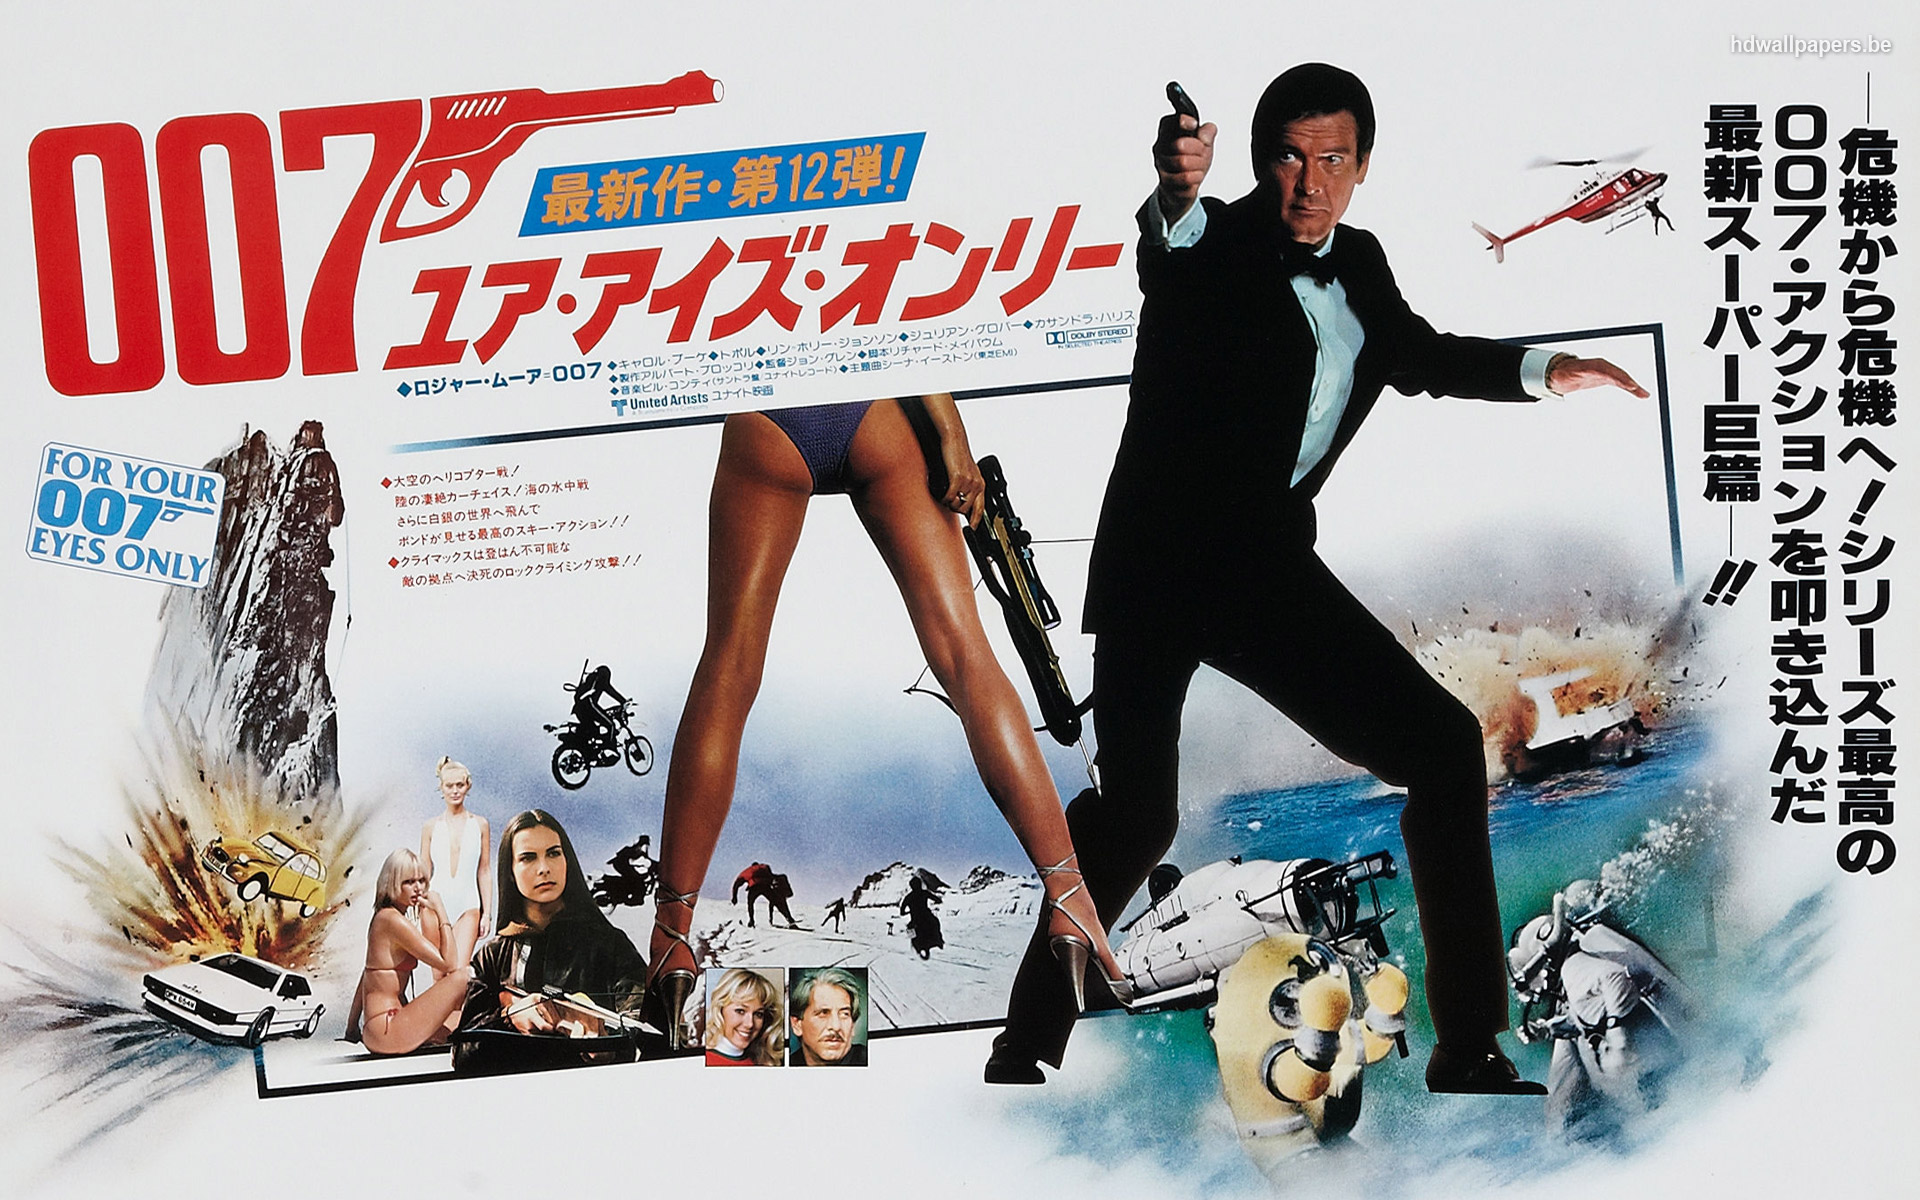 James Bond Wallpaper Vintage Poster HD